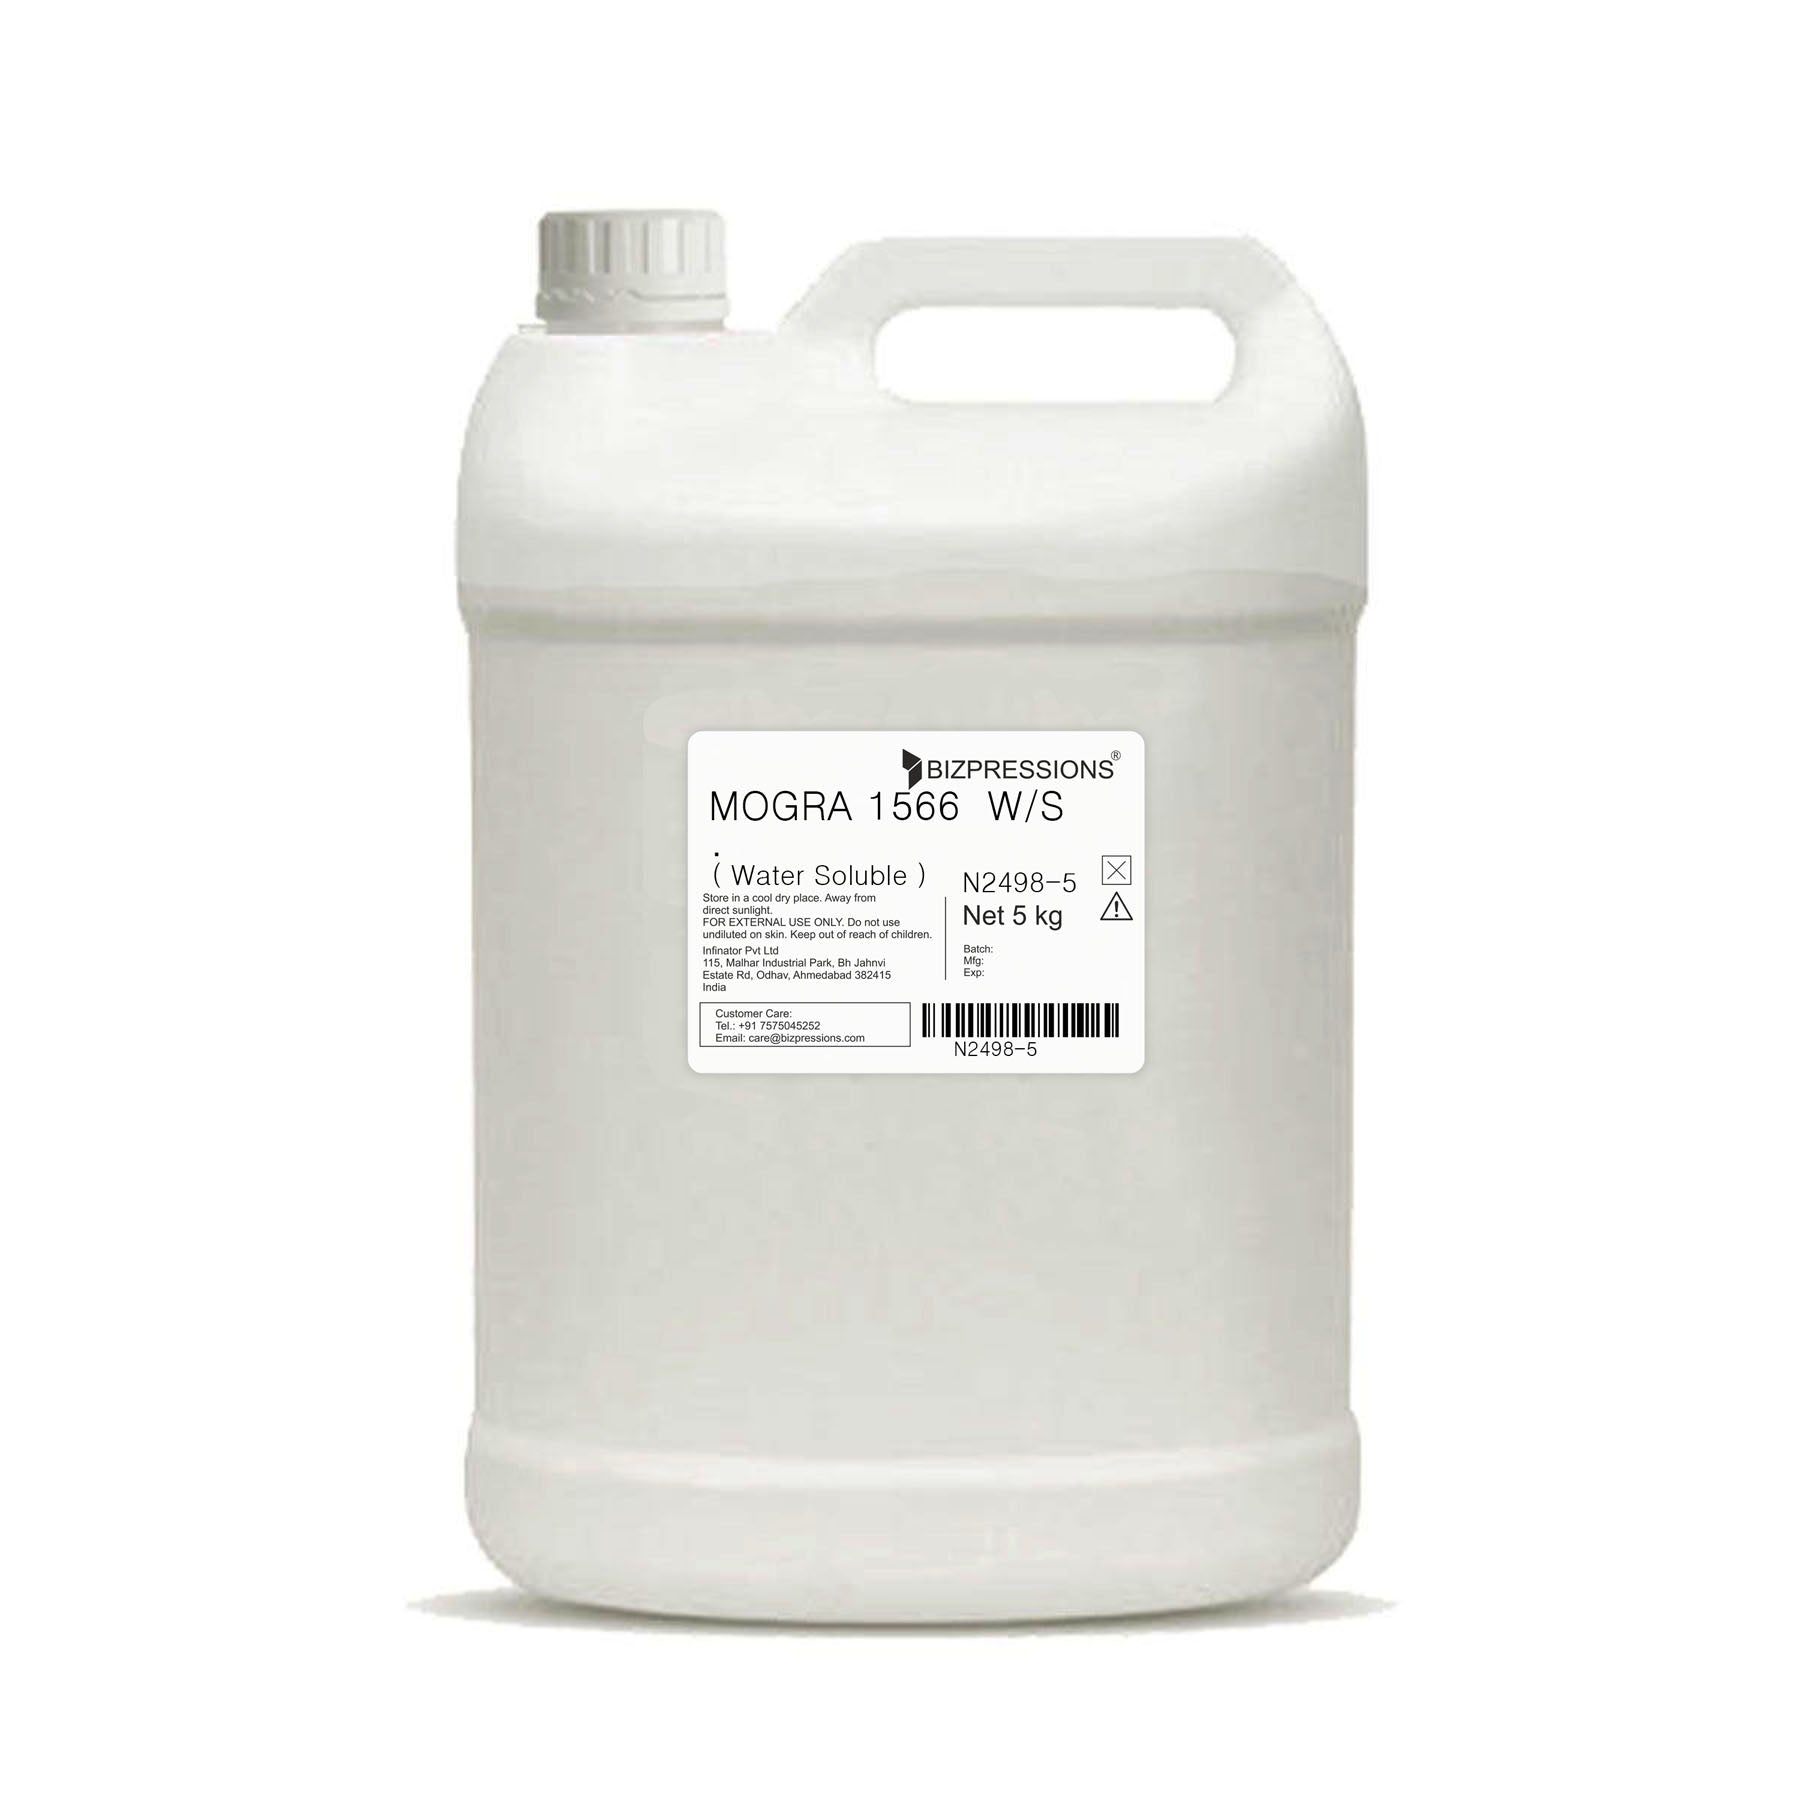 MOGRA 1566 - Fragrance ( Water Soluble ) - 5 kg